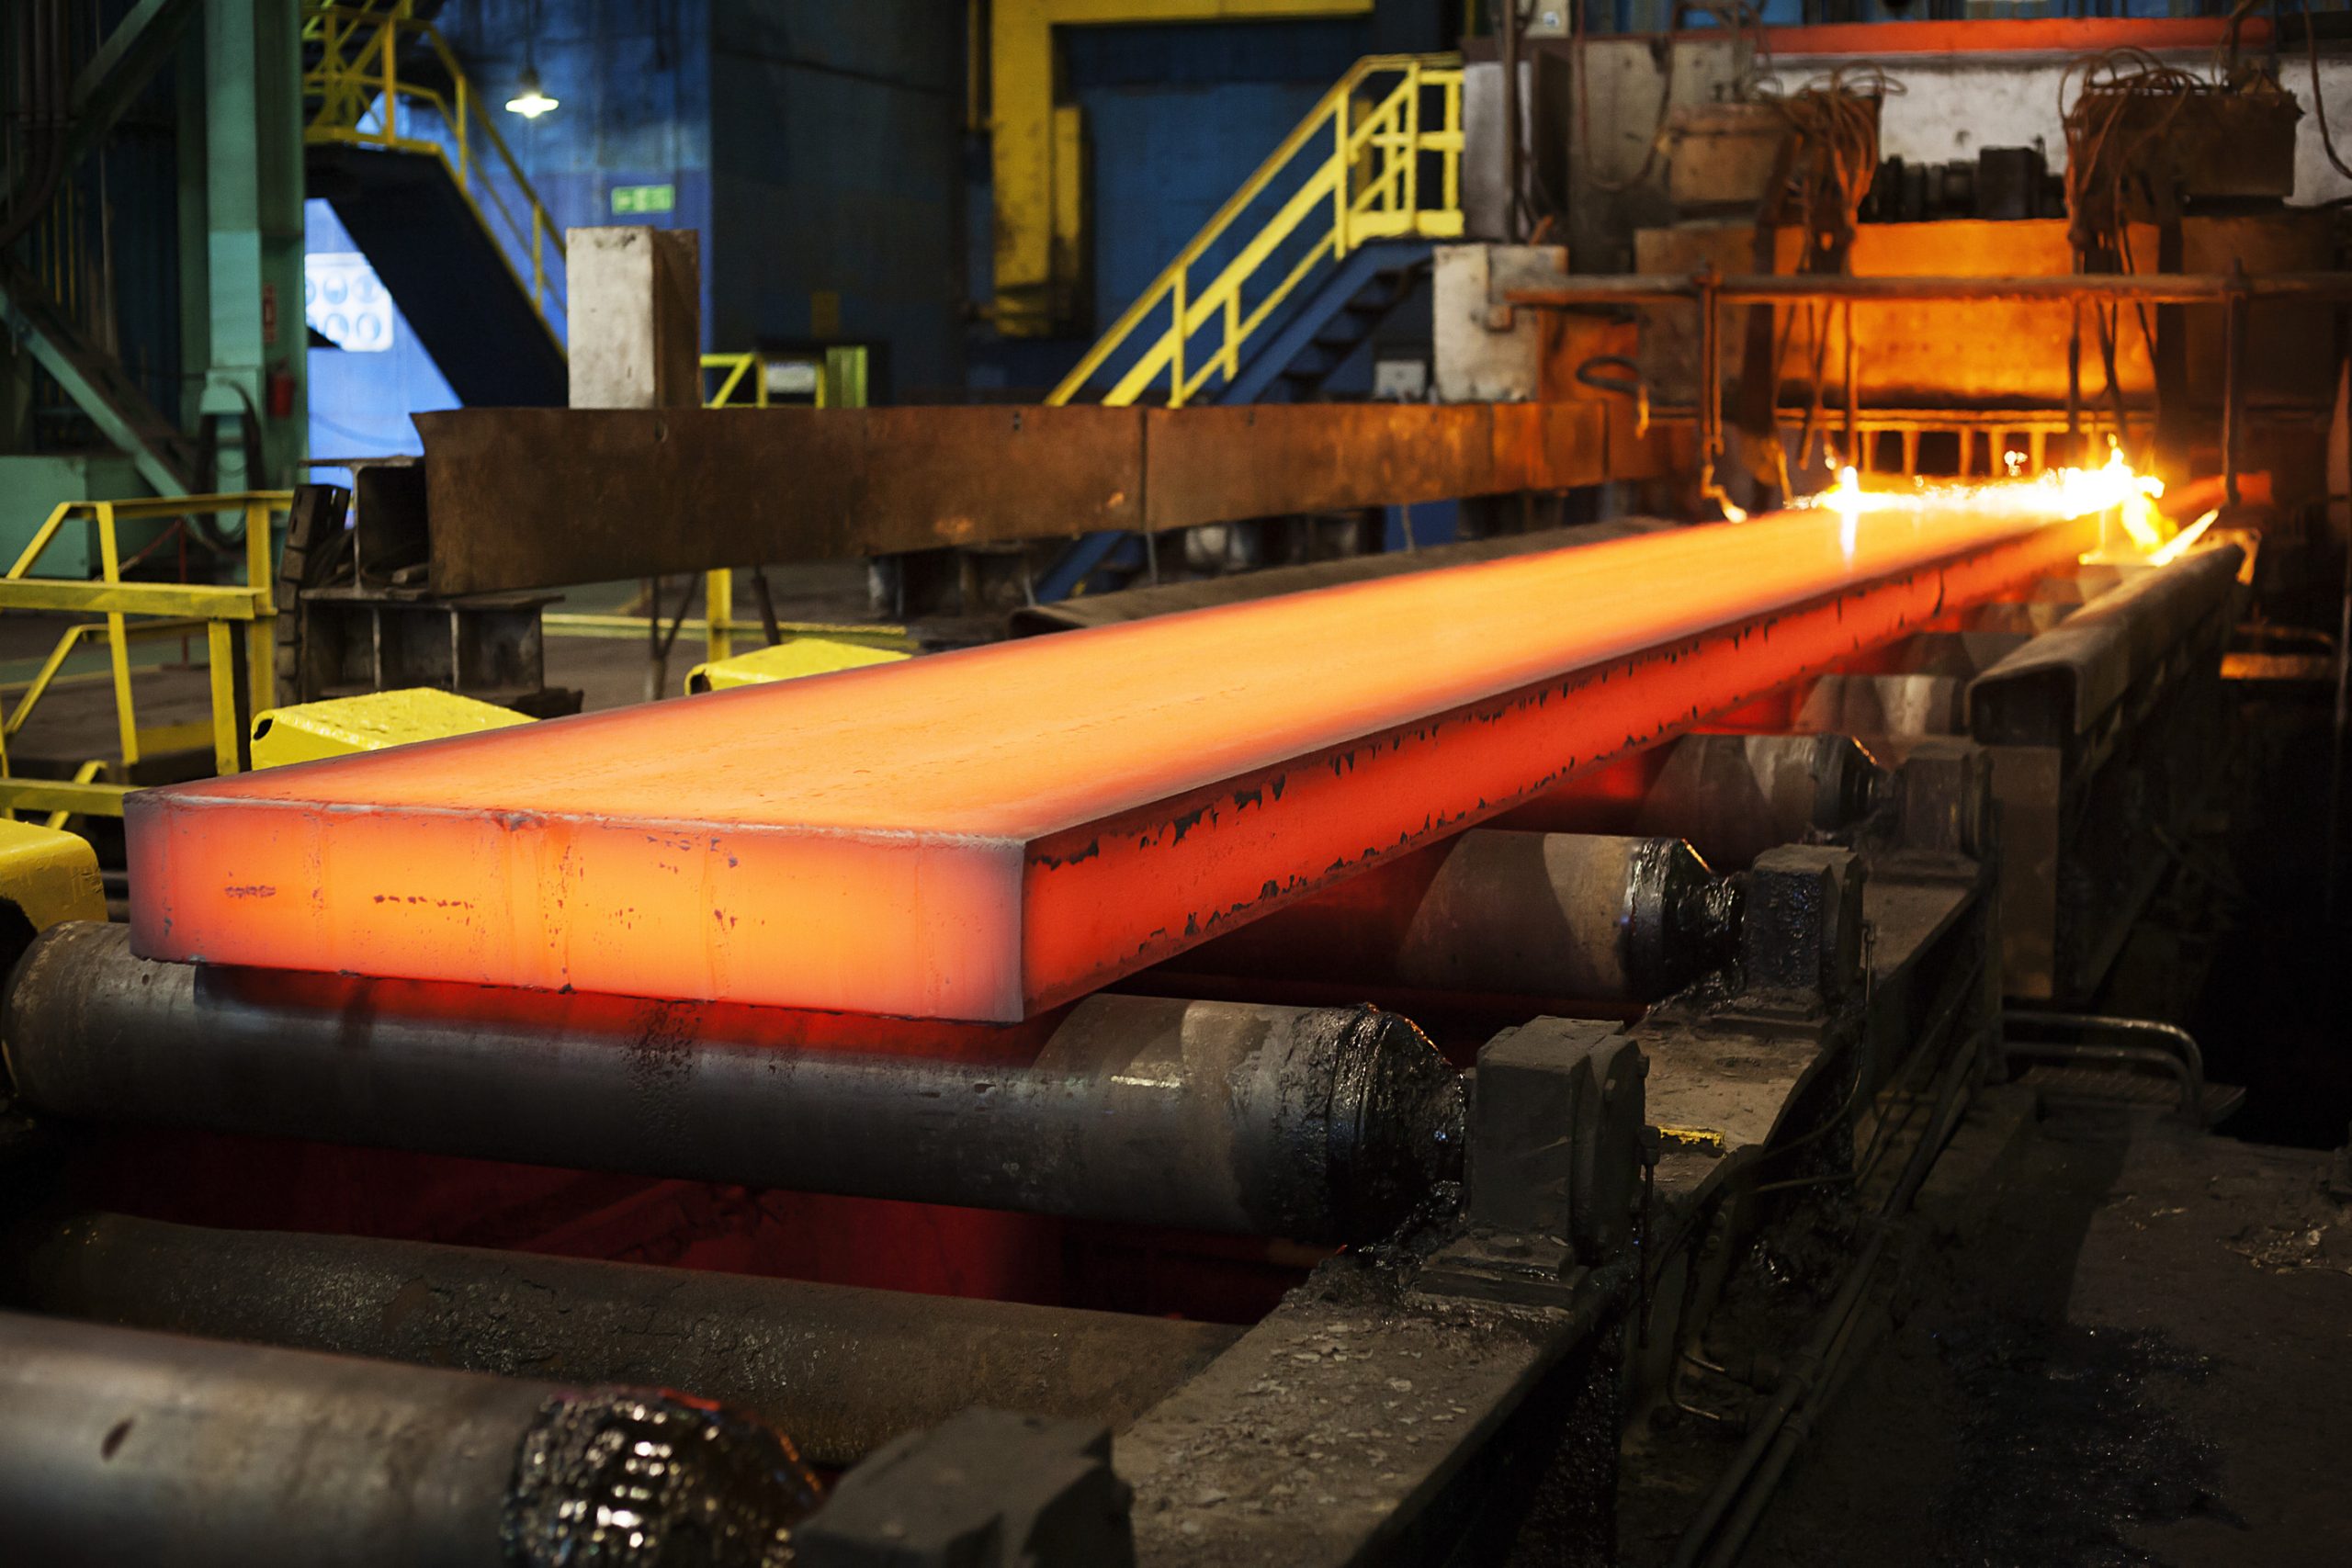 Steel being cut in a factory